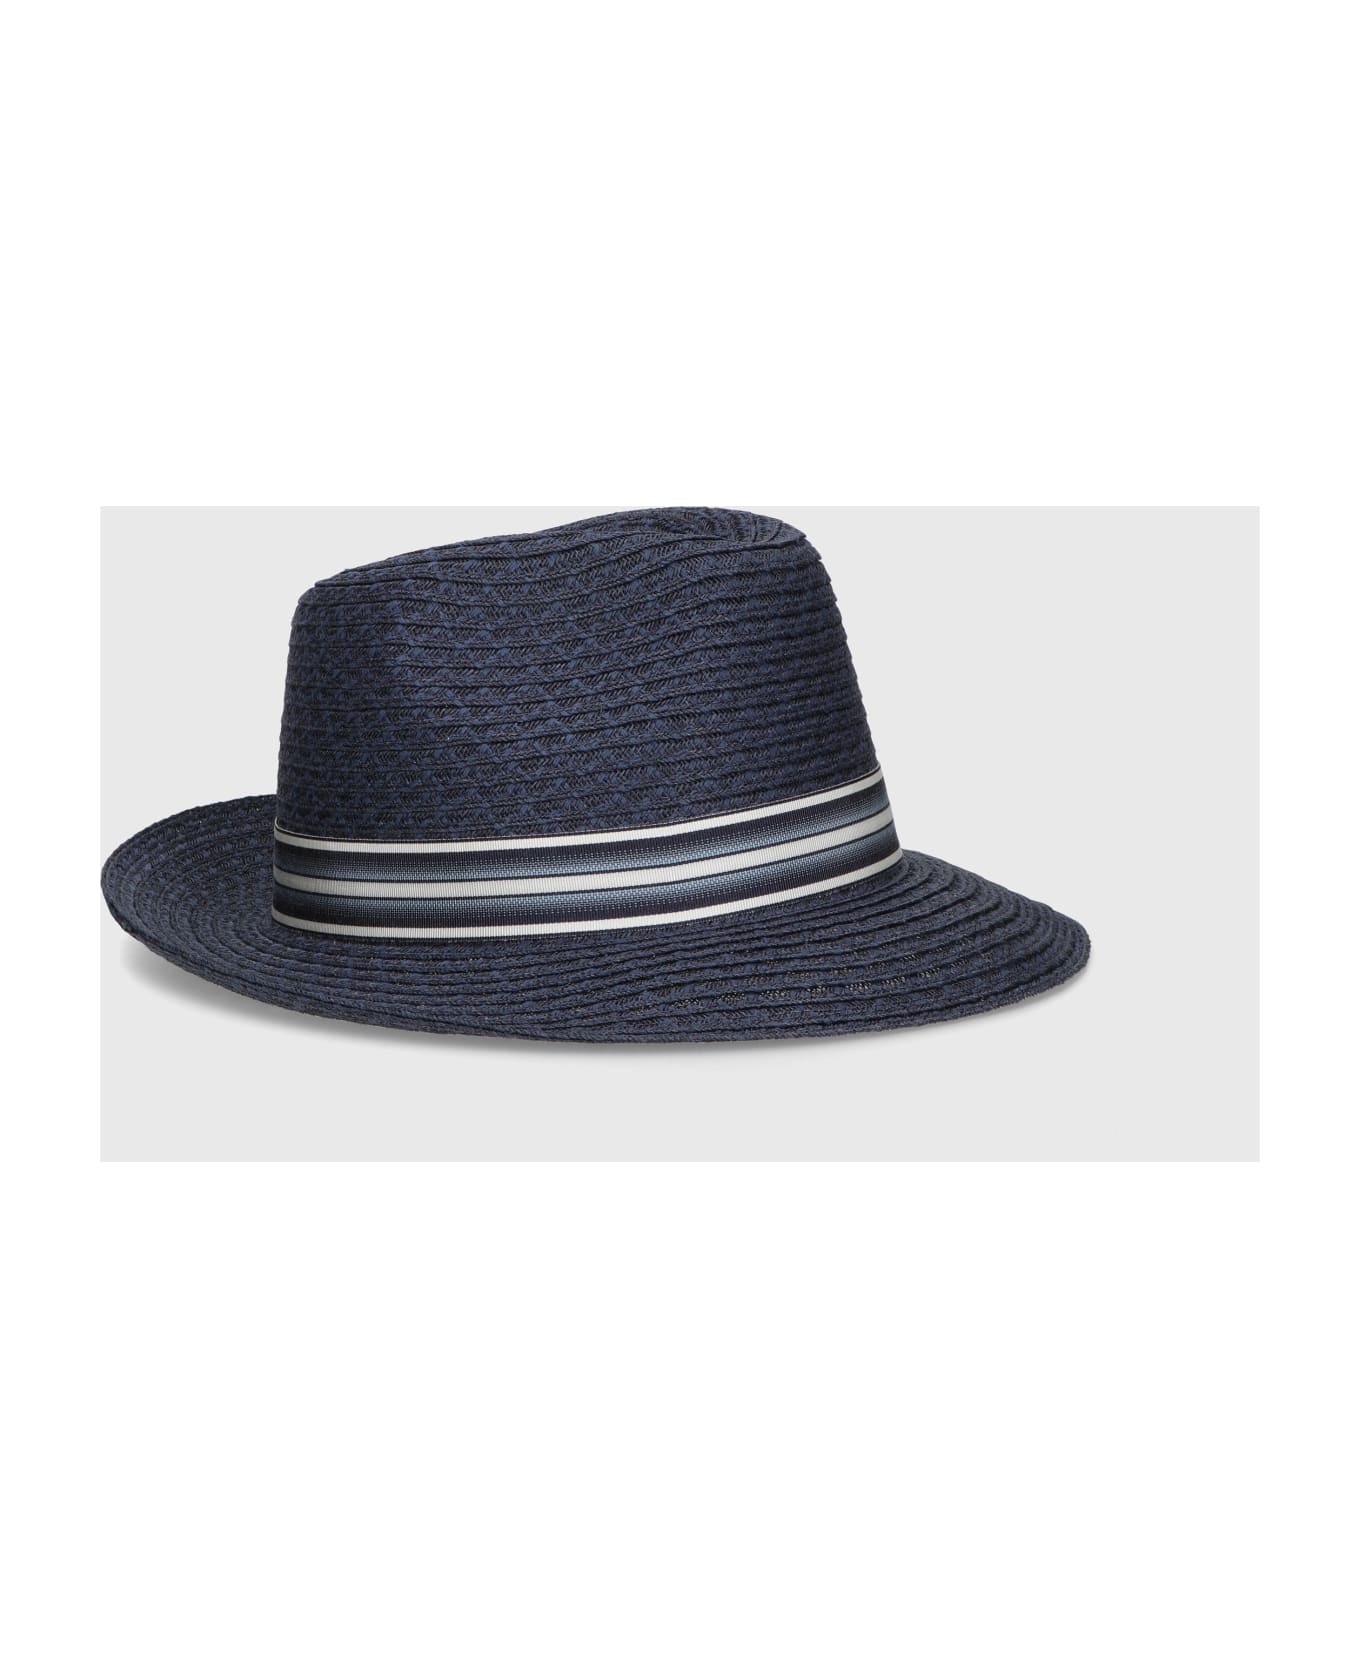 Borsalino Edward Braided Cotton Hemp - NAVY BLUE, BLUE/WHITE HAT BAND